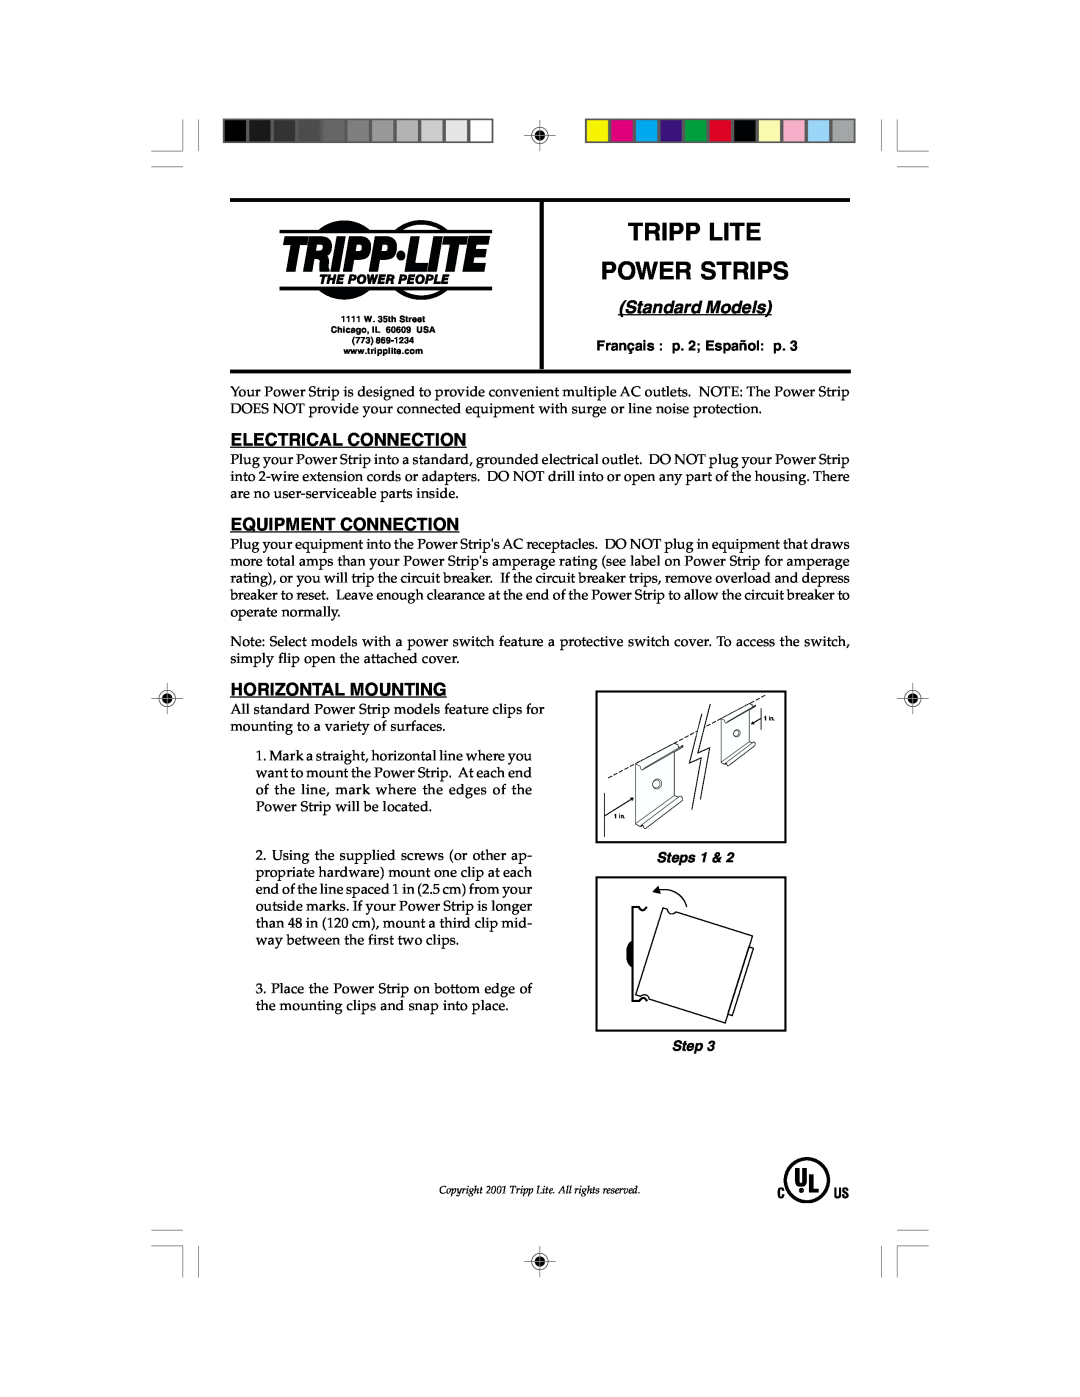 Tripp Lite Surge Protector user service Tripp Lite Power Strips, Standard Models, Electrical Connection, Steps 1 